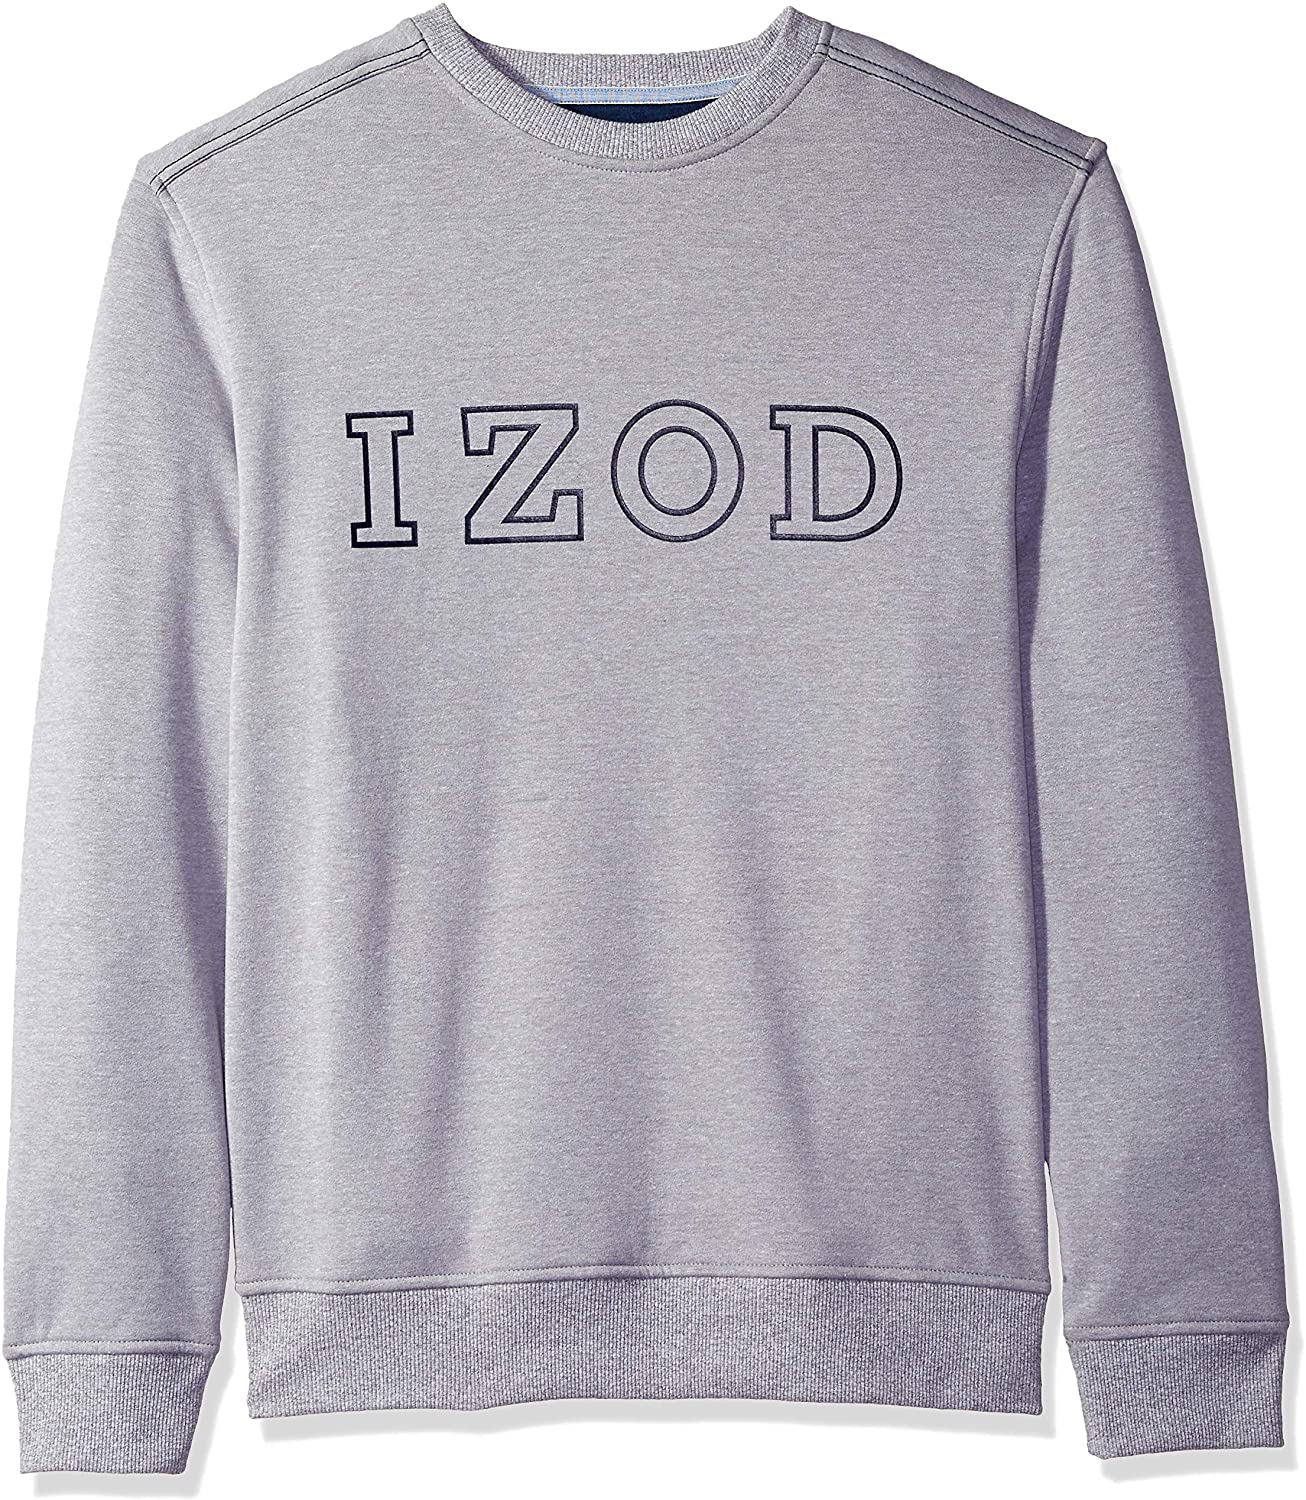 IZOD Men's Advantage Performance Crewneck Fleece Sweatshirt | eBay